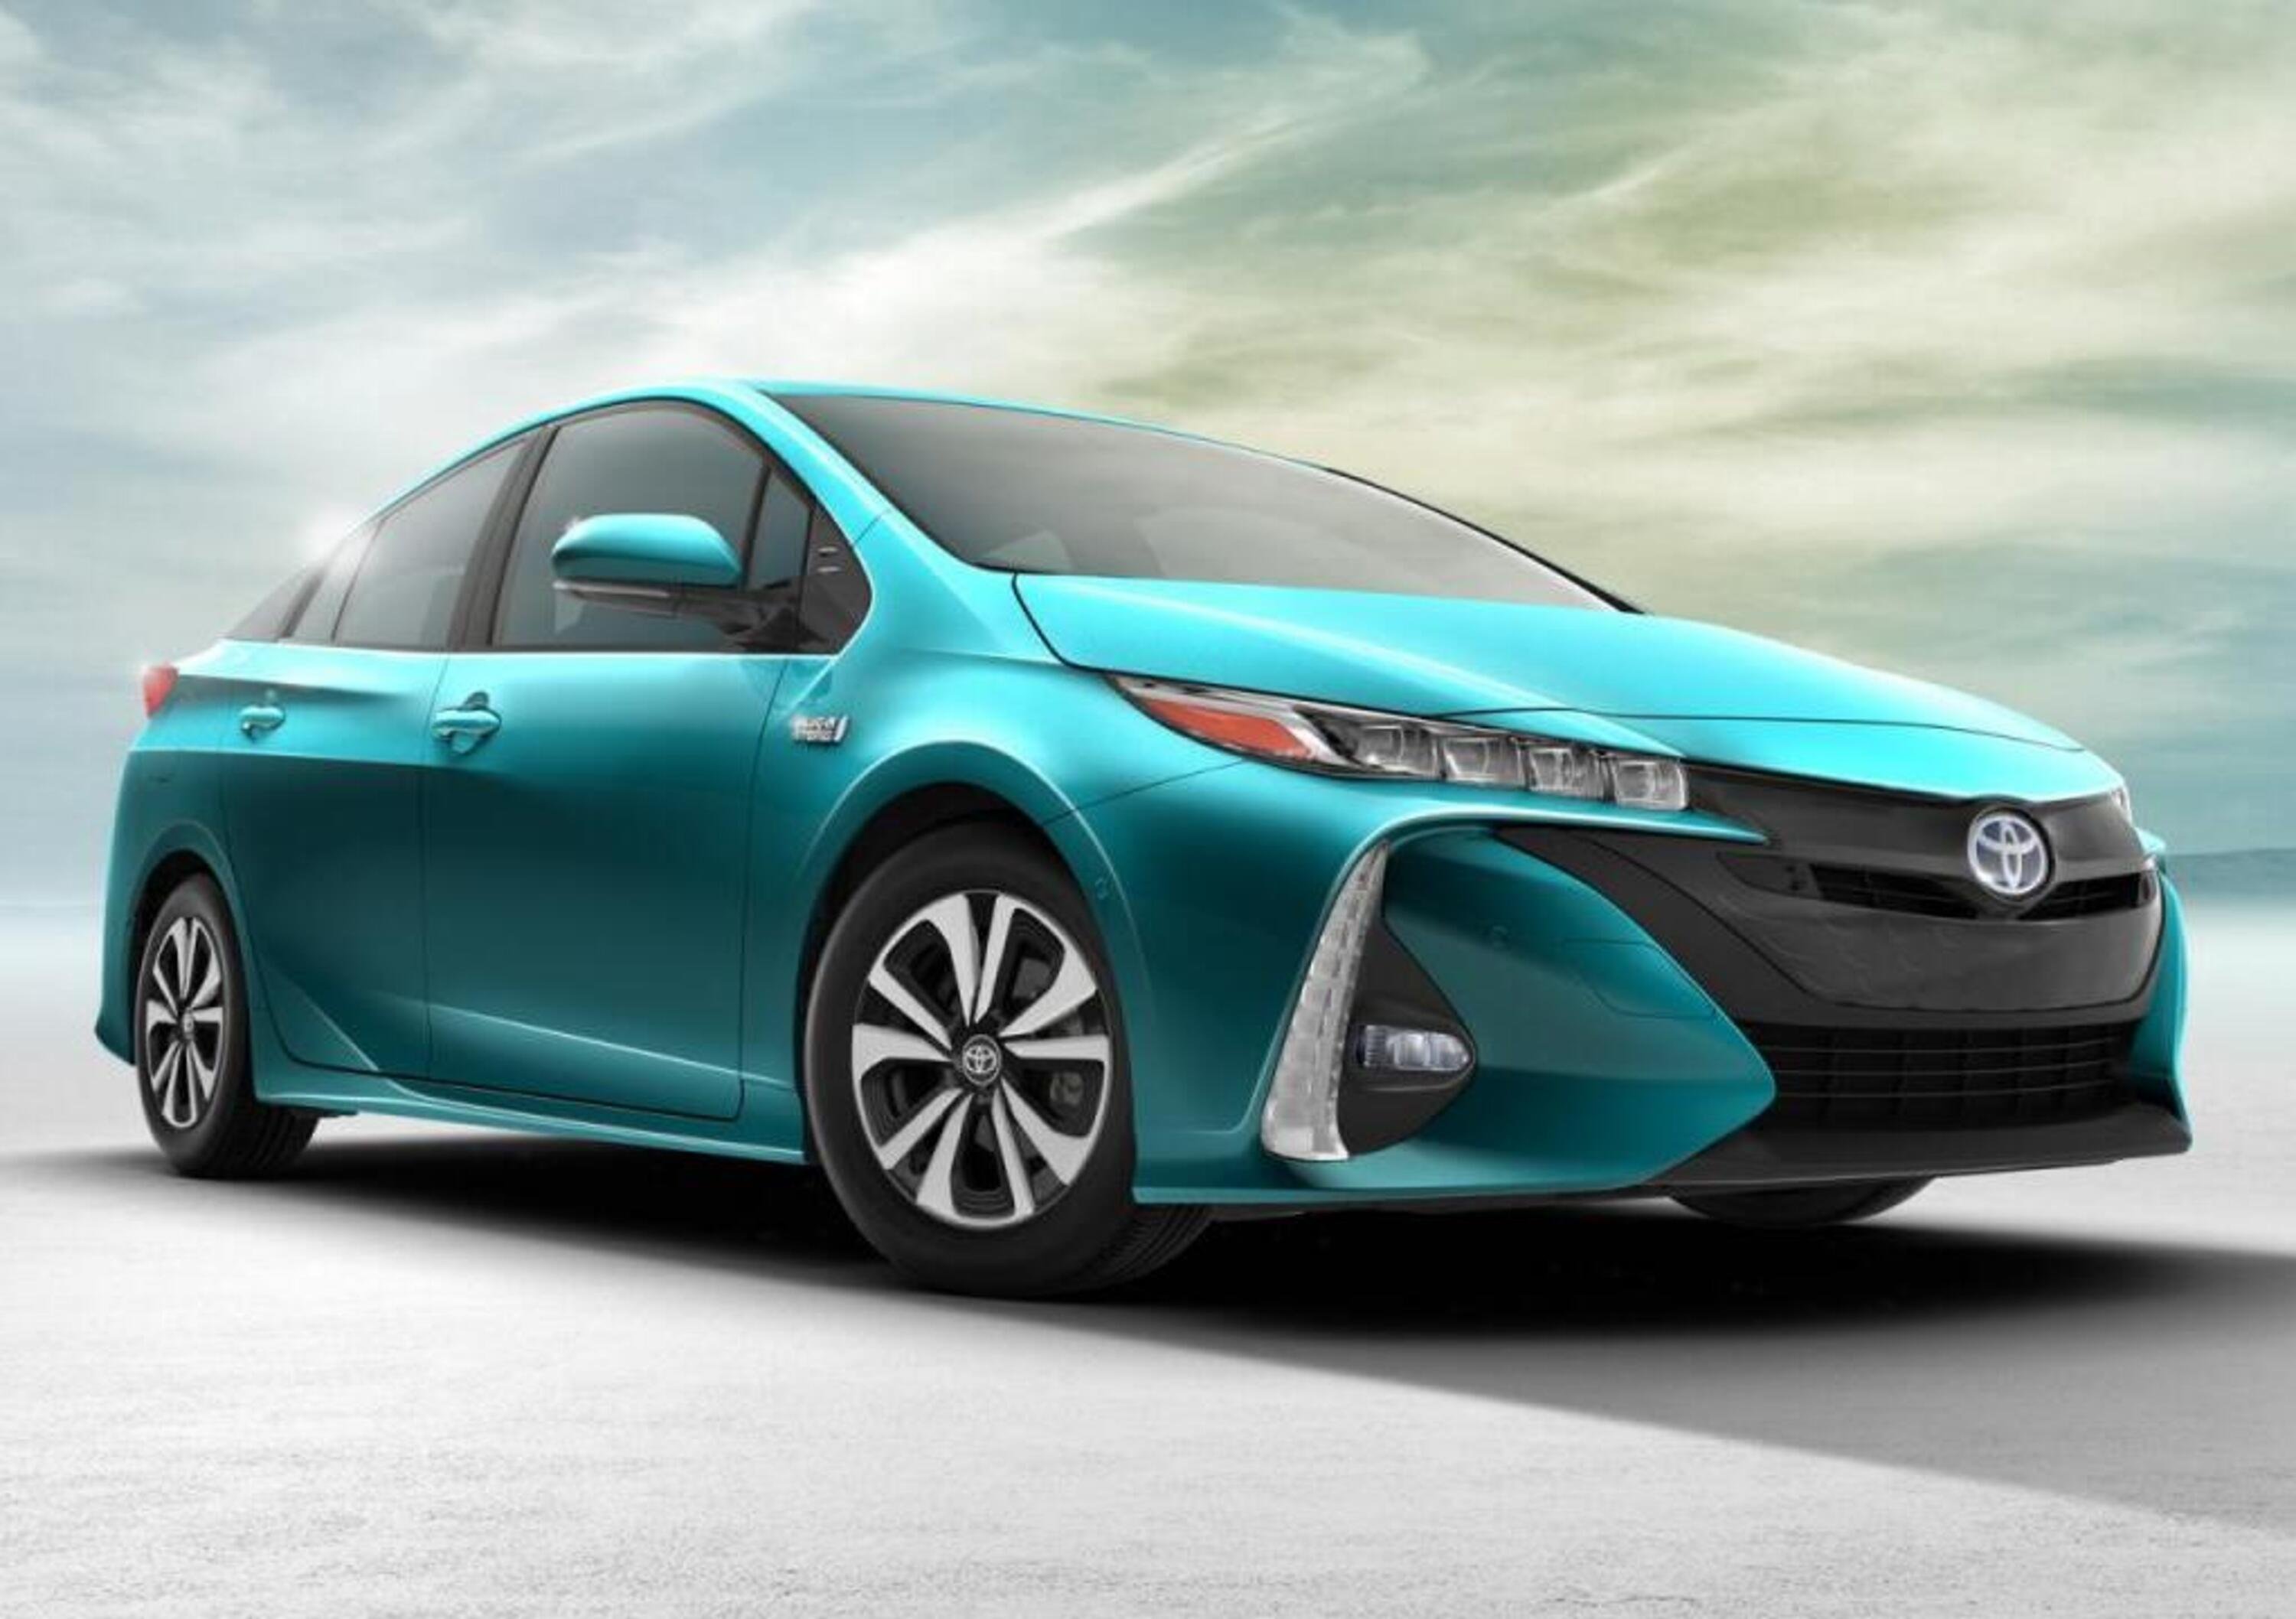 Nuova Toyota Prius Plug-in Hybrid, consuma 1,4 l/100 km